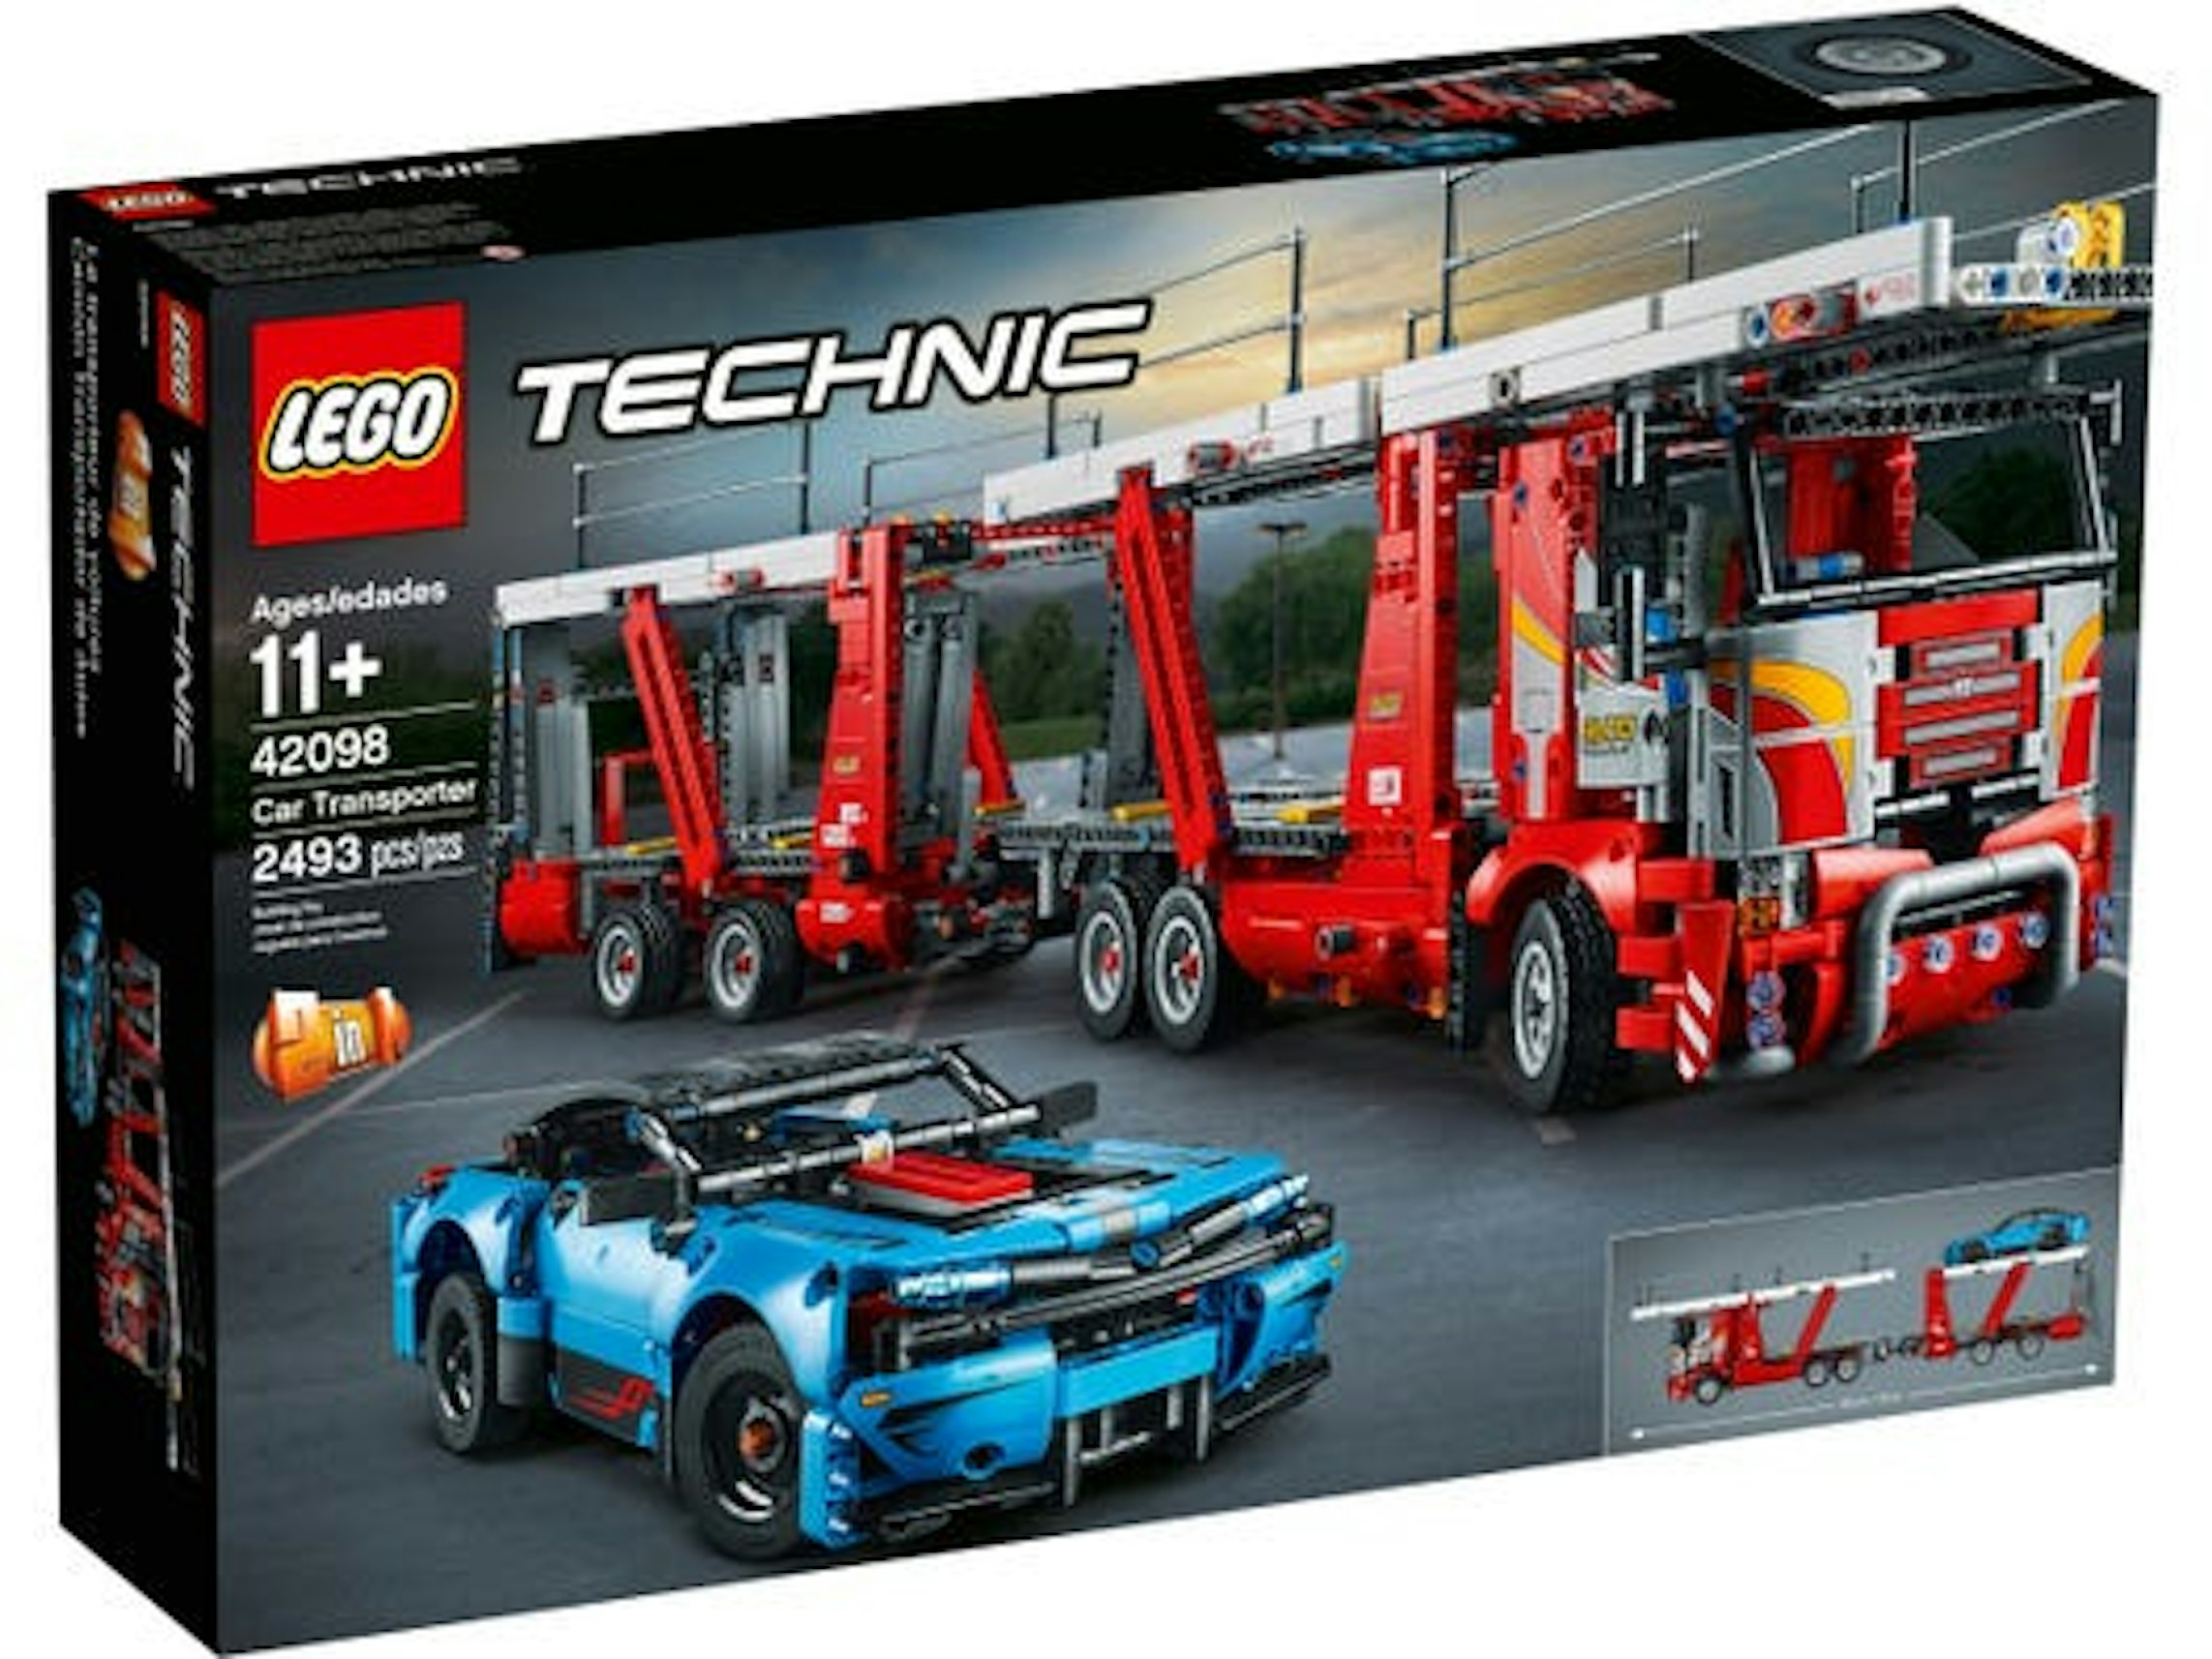 LEGO Technic Car Set 42098